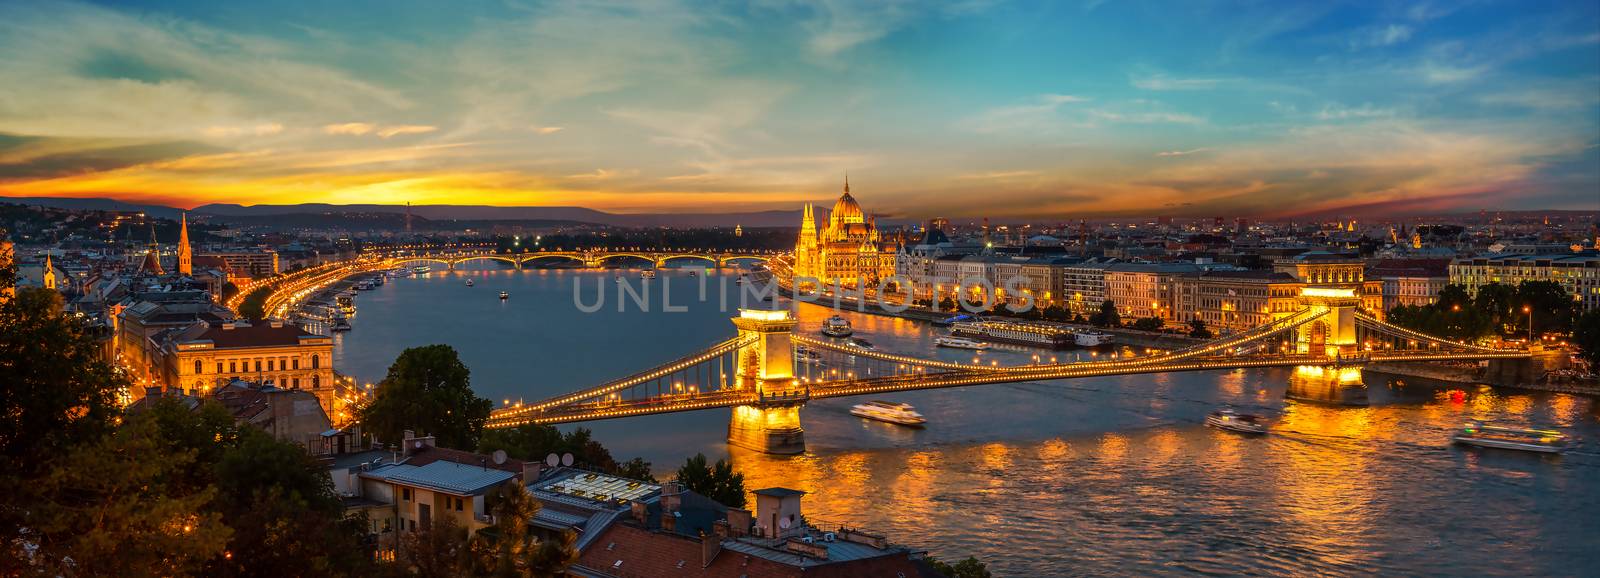 Panoramic view on illuminated Budapest in evening, Hungary